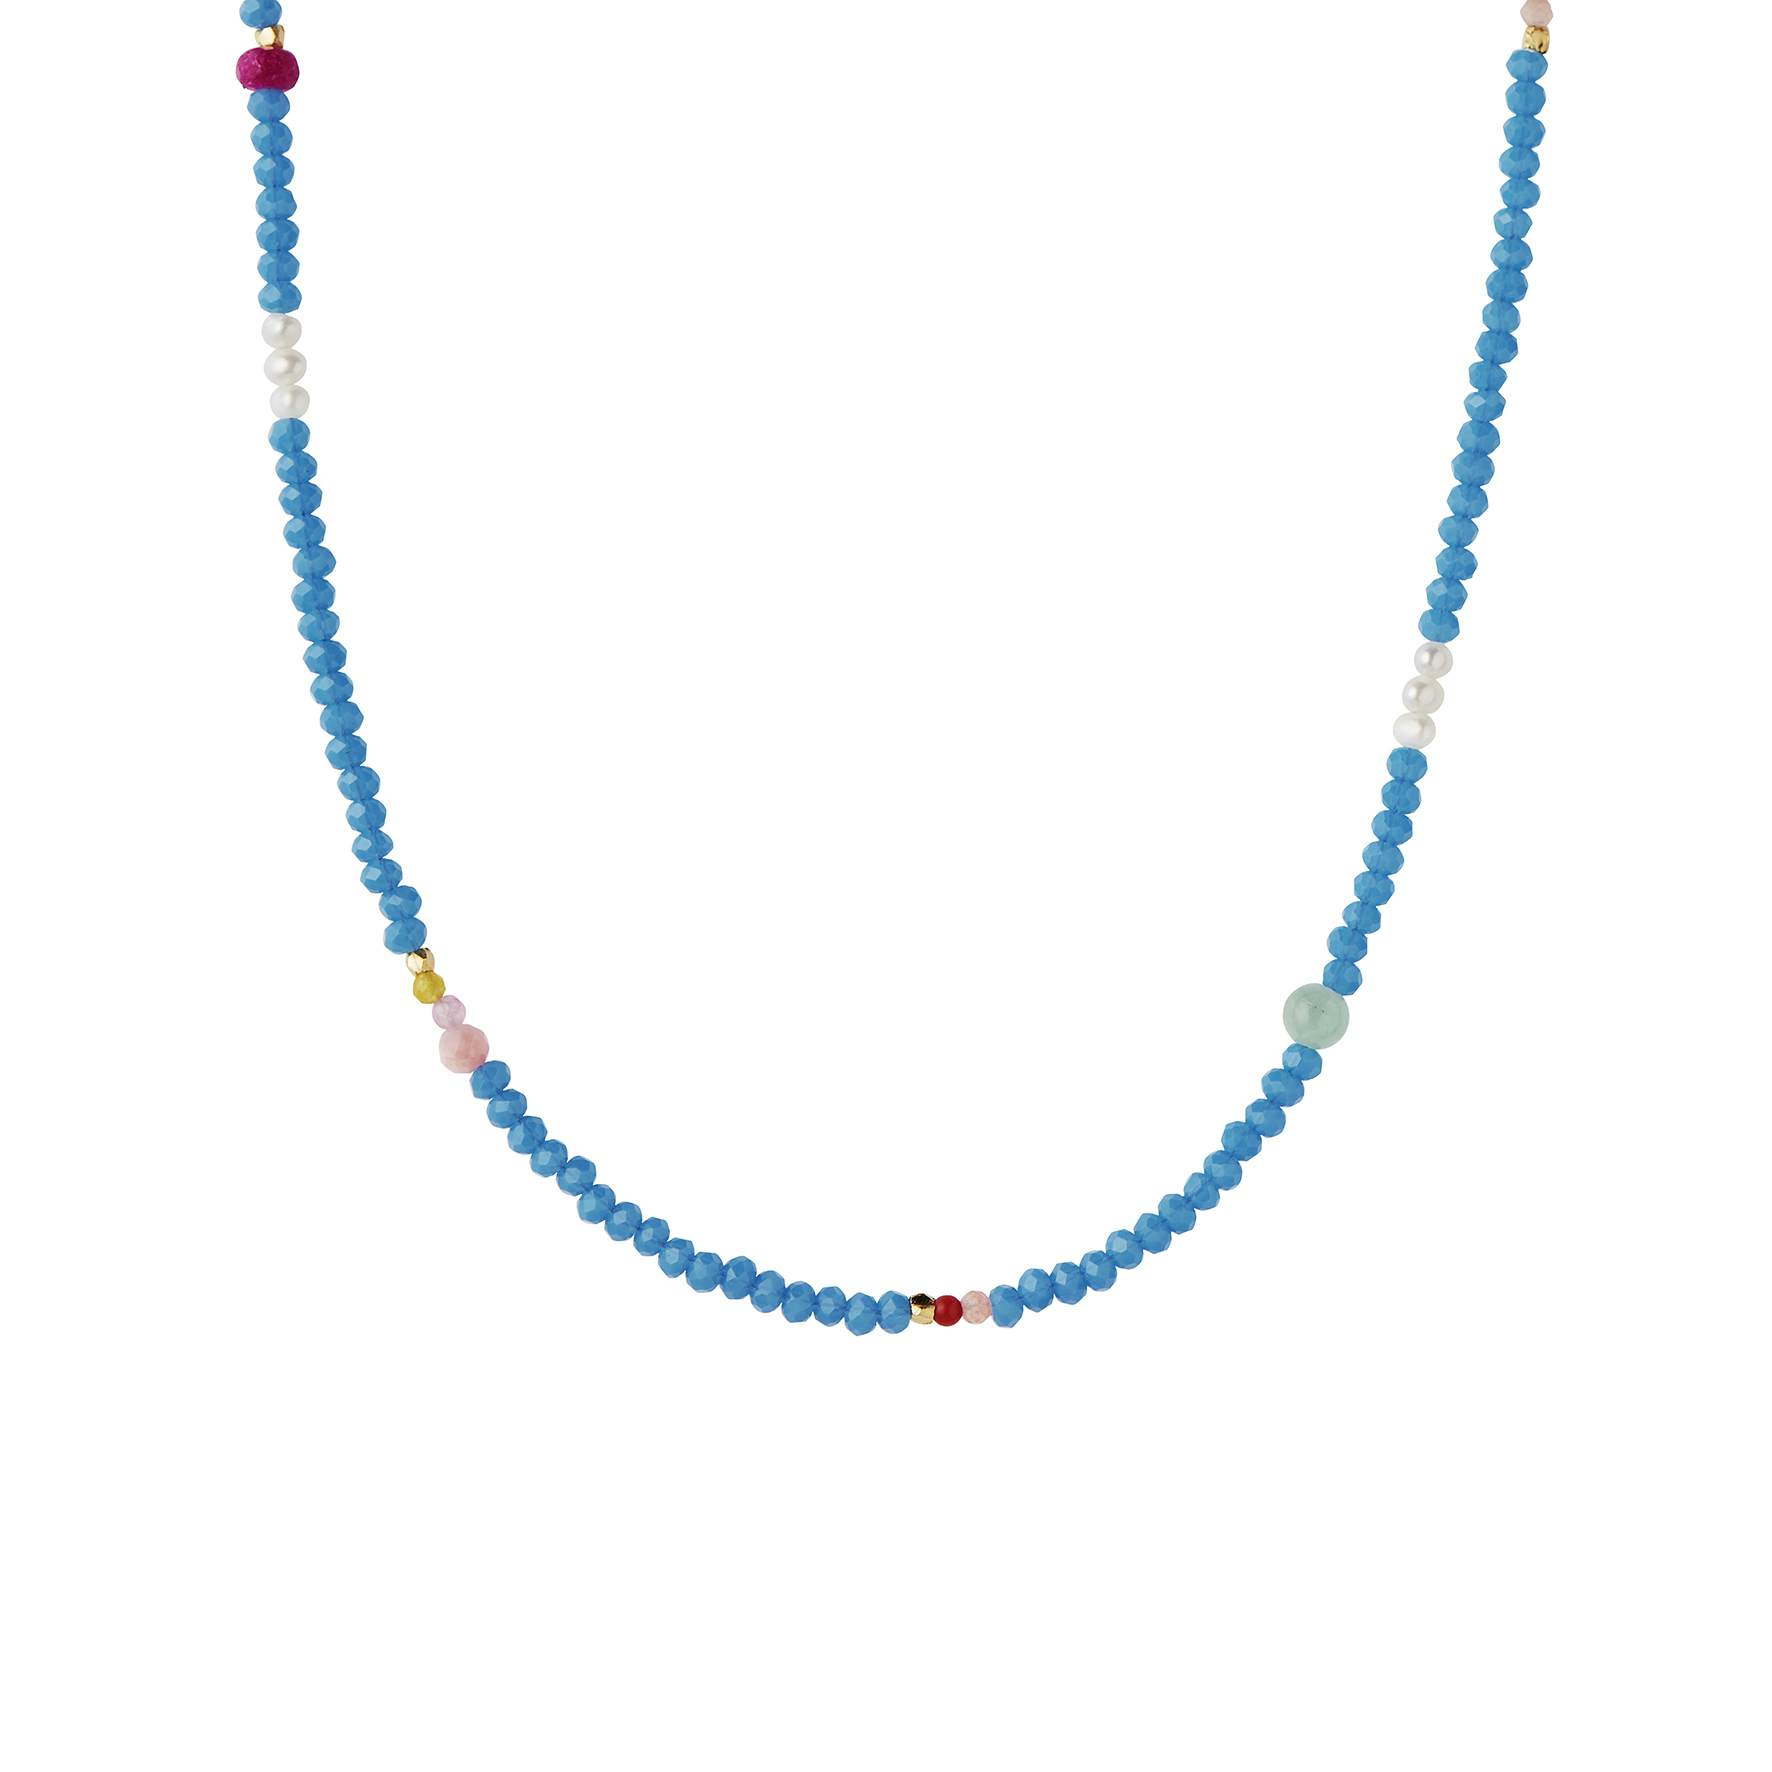 Color Crush Necklace - Santorini Mix fra STINE A Jewelry i Forgyldt-Sølv Sterling 925